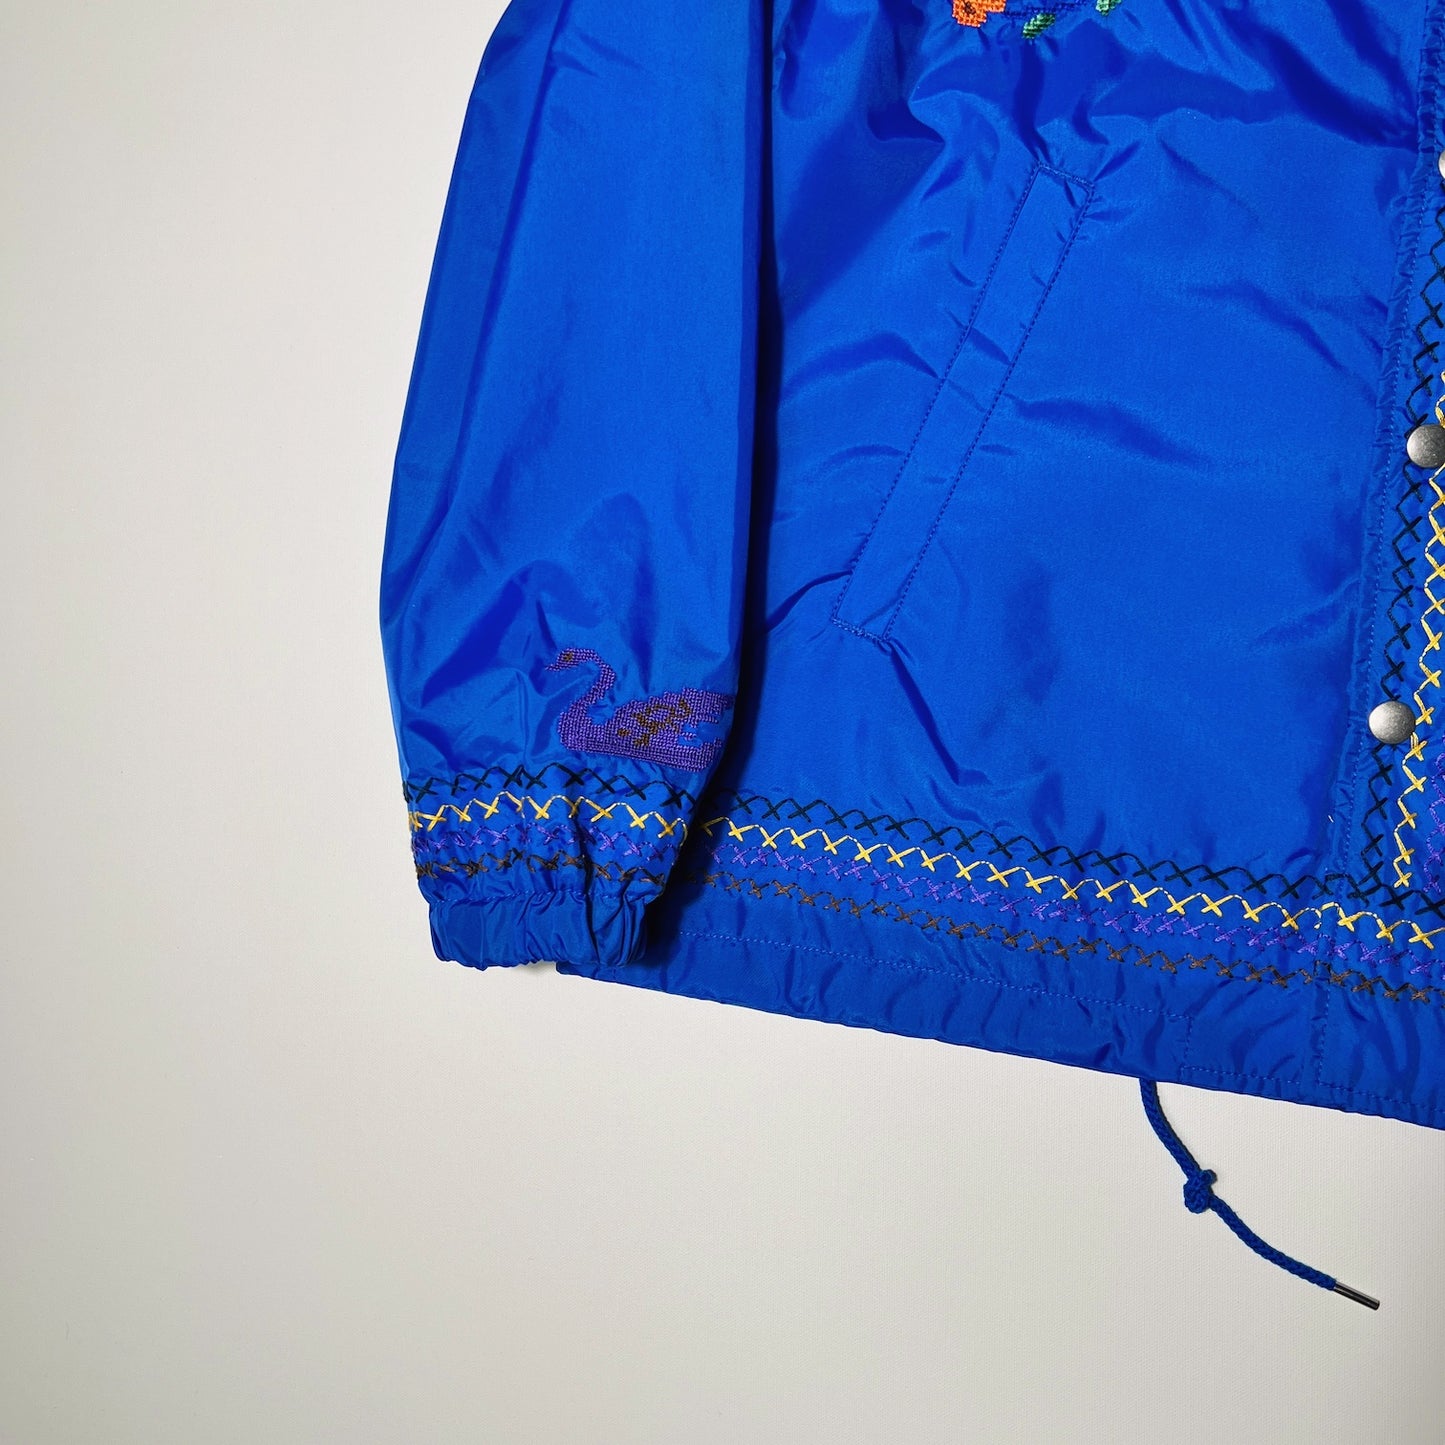 Cross-stitch coach jacket Blue